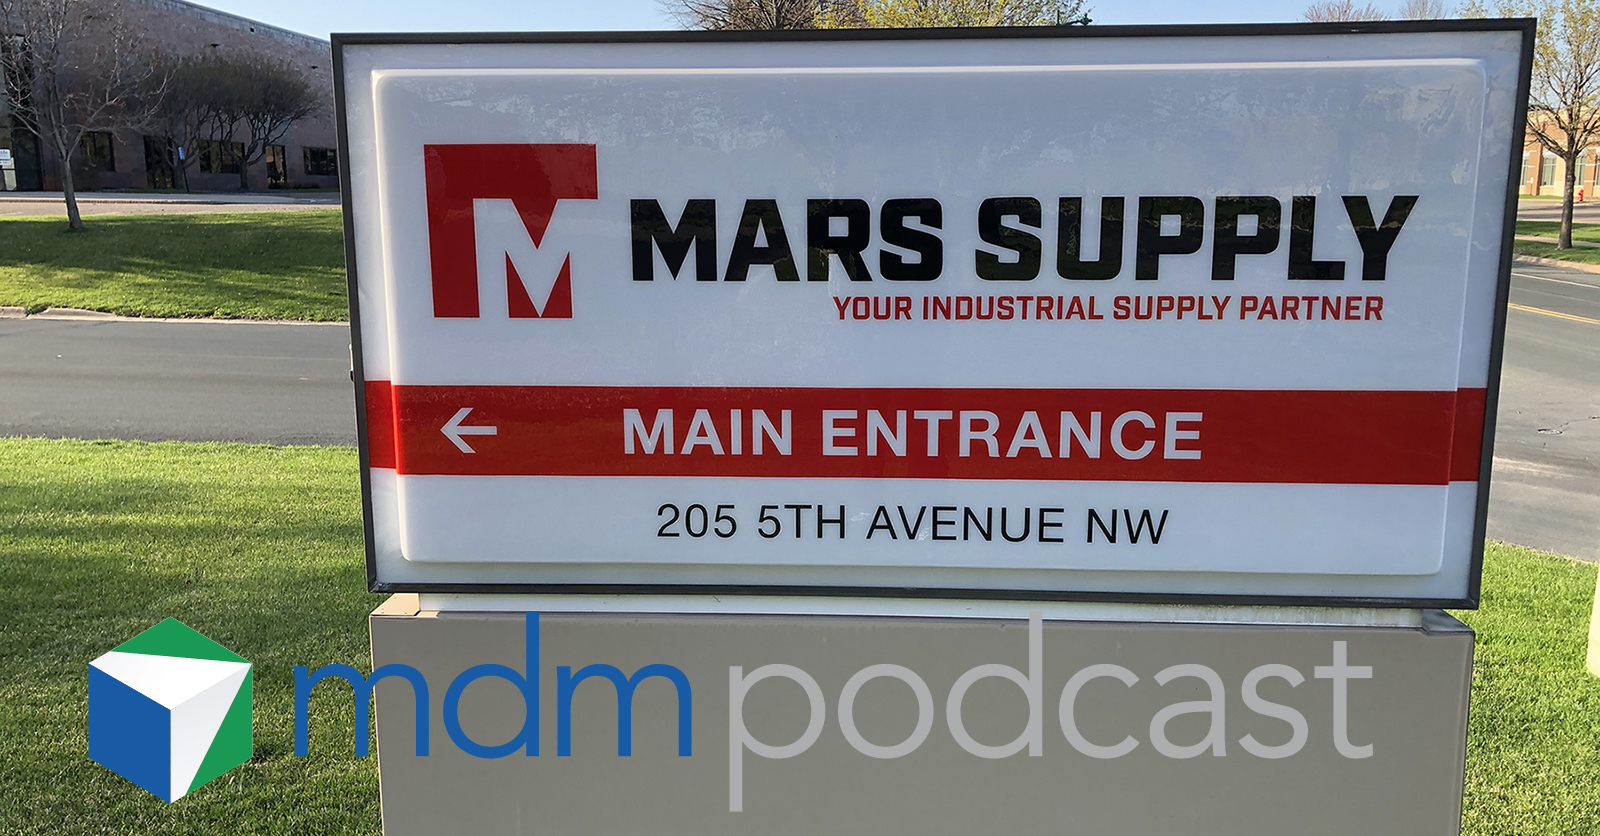 Mars Supply Podcast